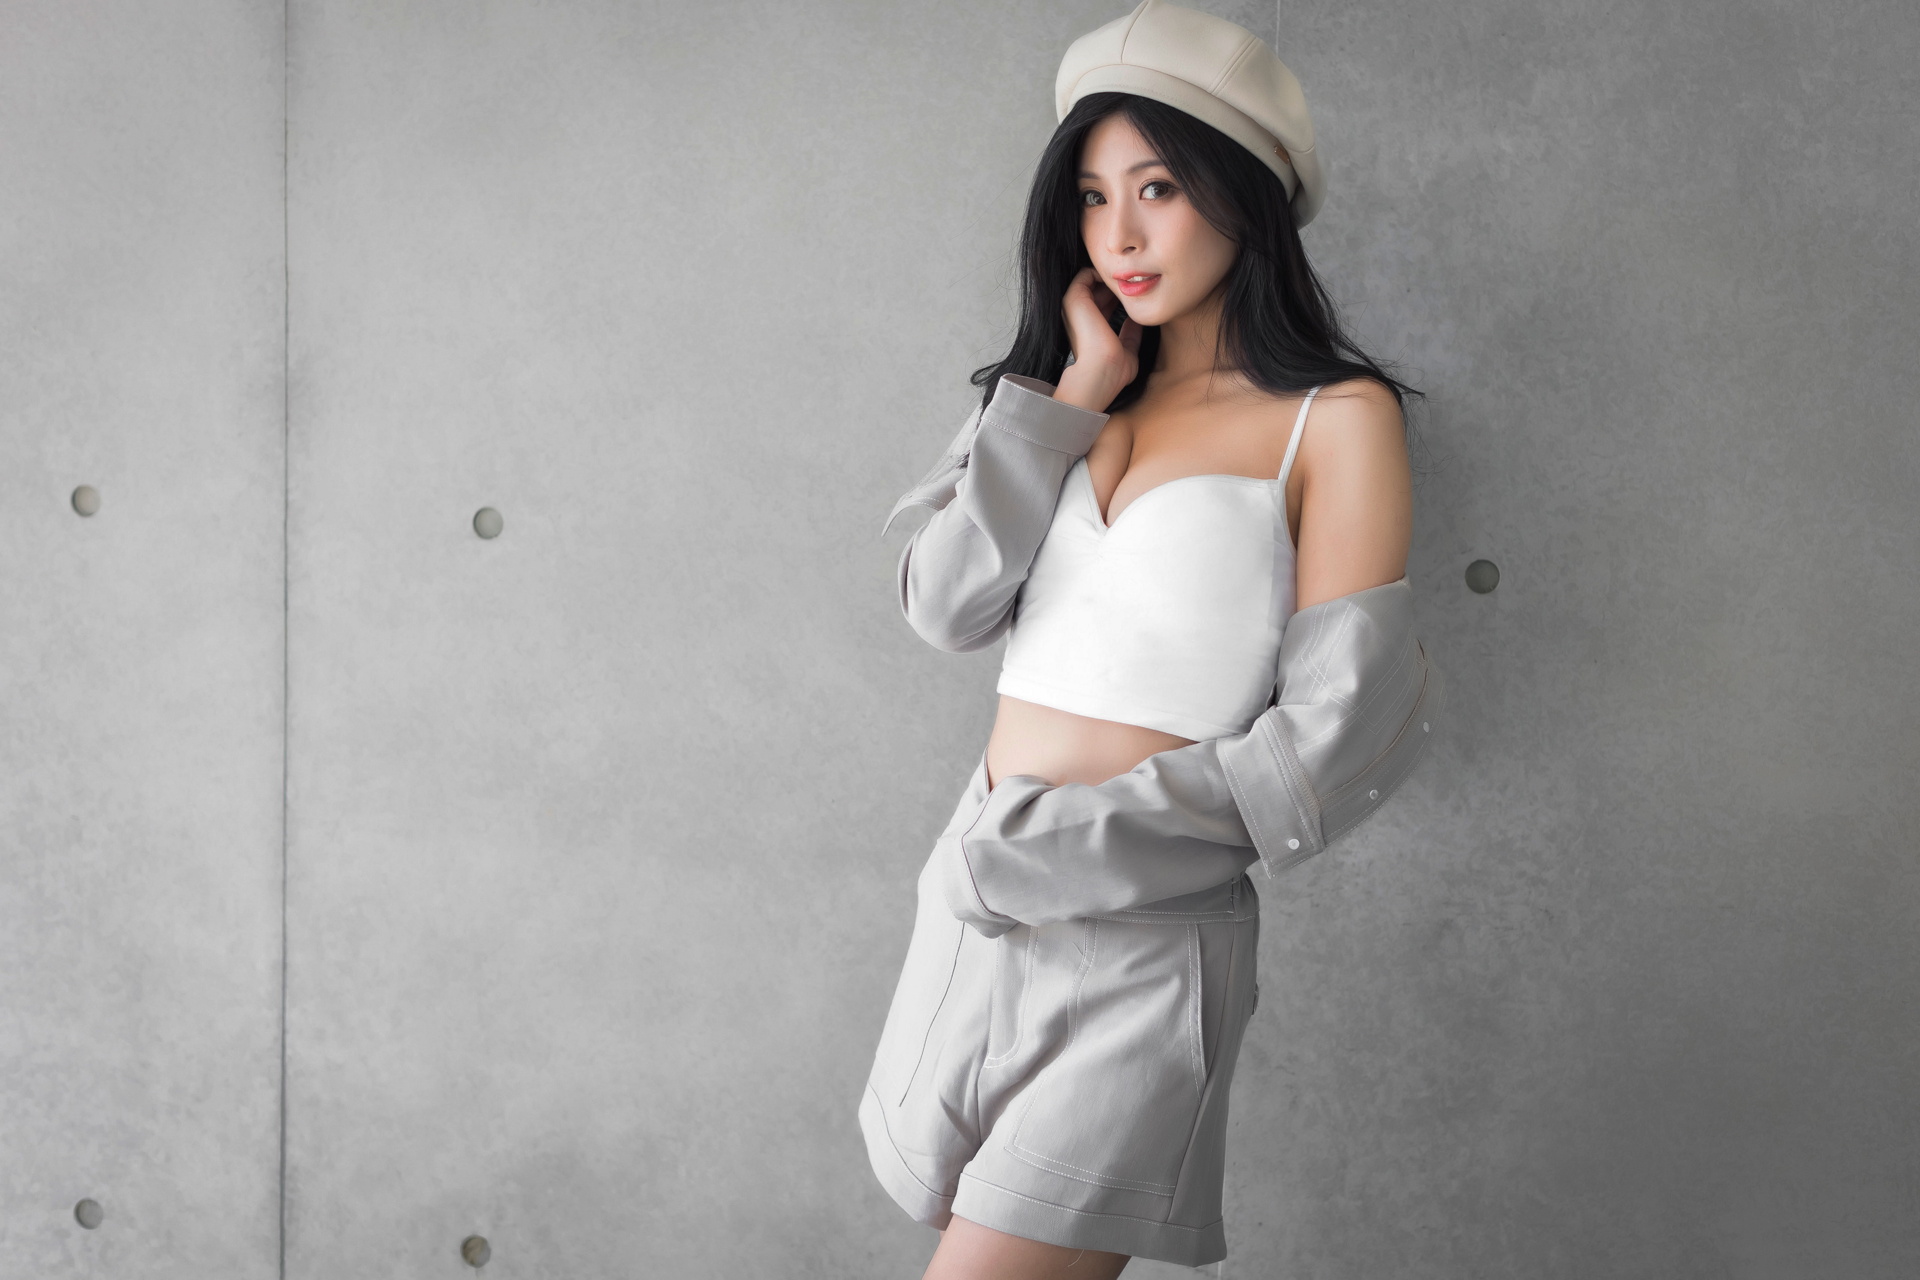 Asian Model Women Long Hair Dark Hair Berets Shorts White Shirt PinQ 1920x1280